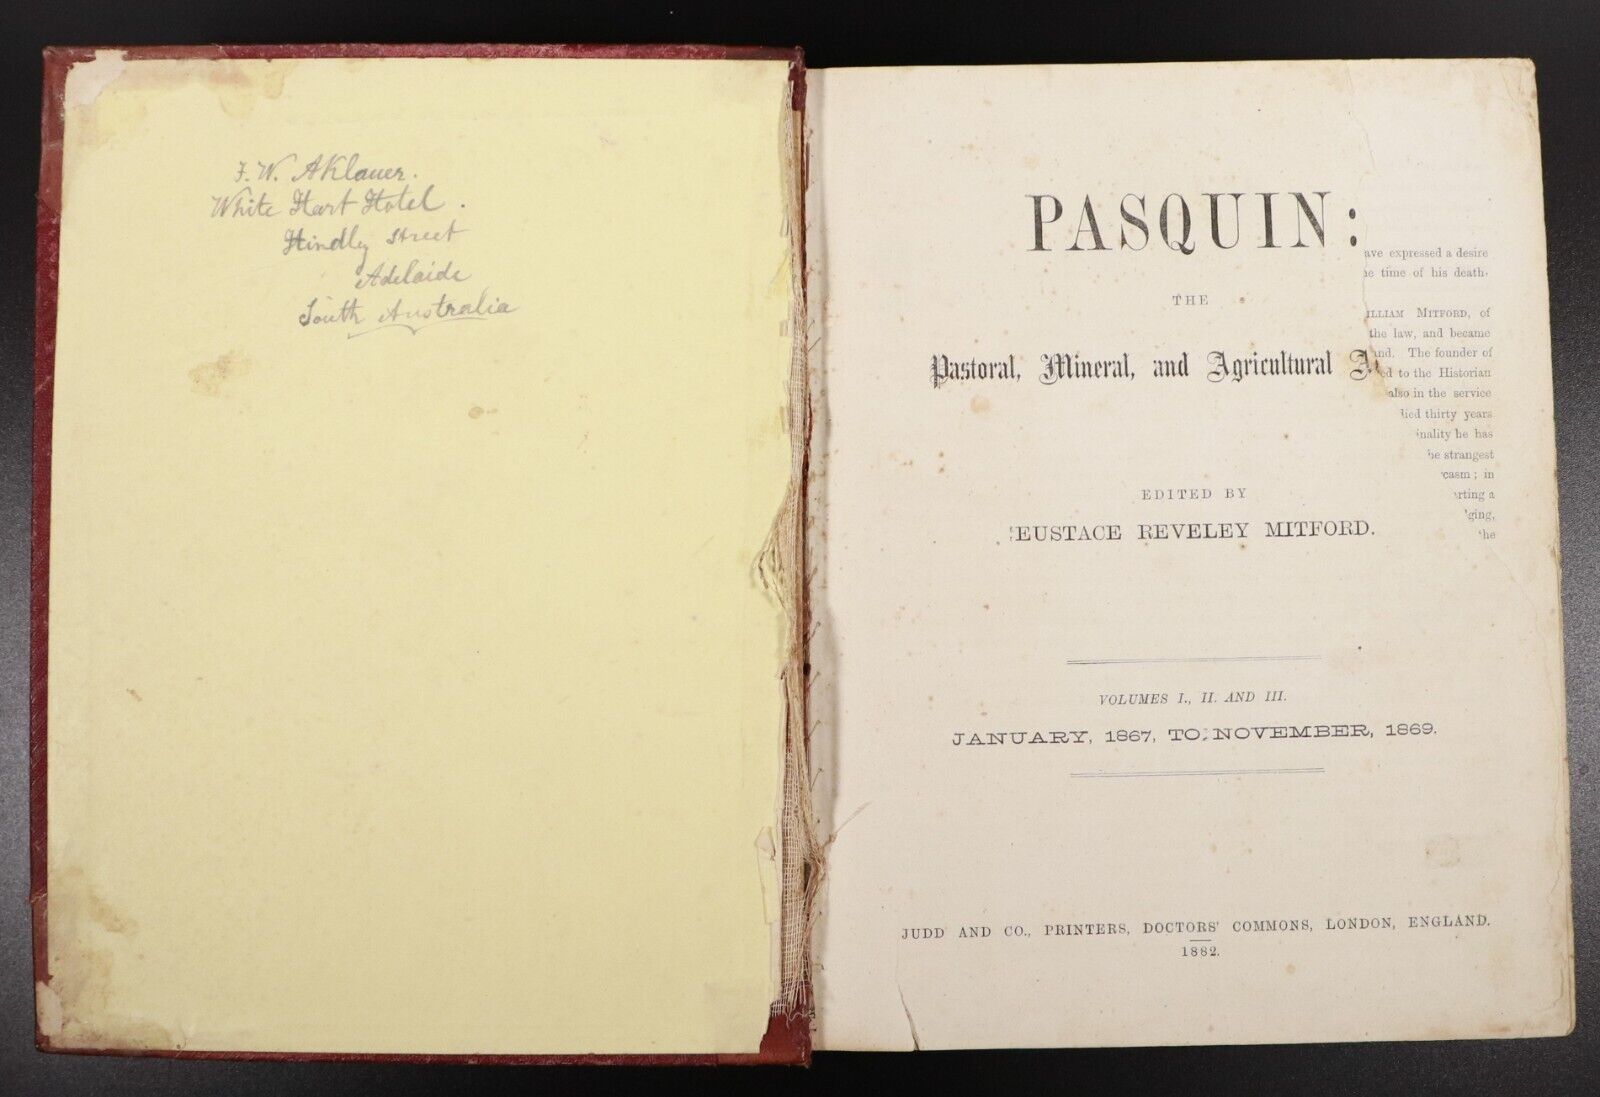 1882 Pasquin Newspaper Antiquarian South Australian News Journal Book 1867-1869 - 0